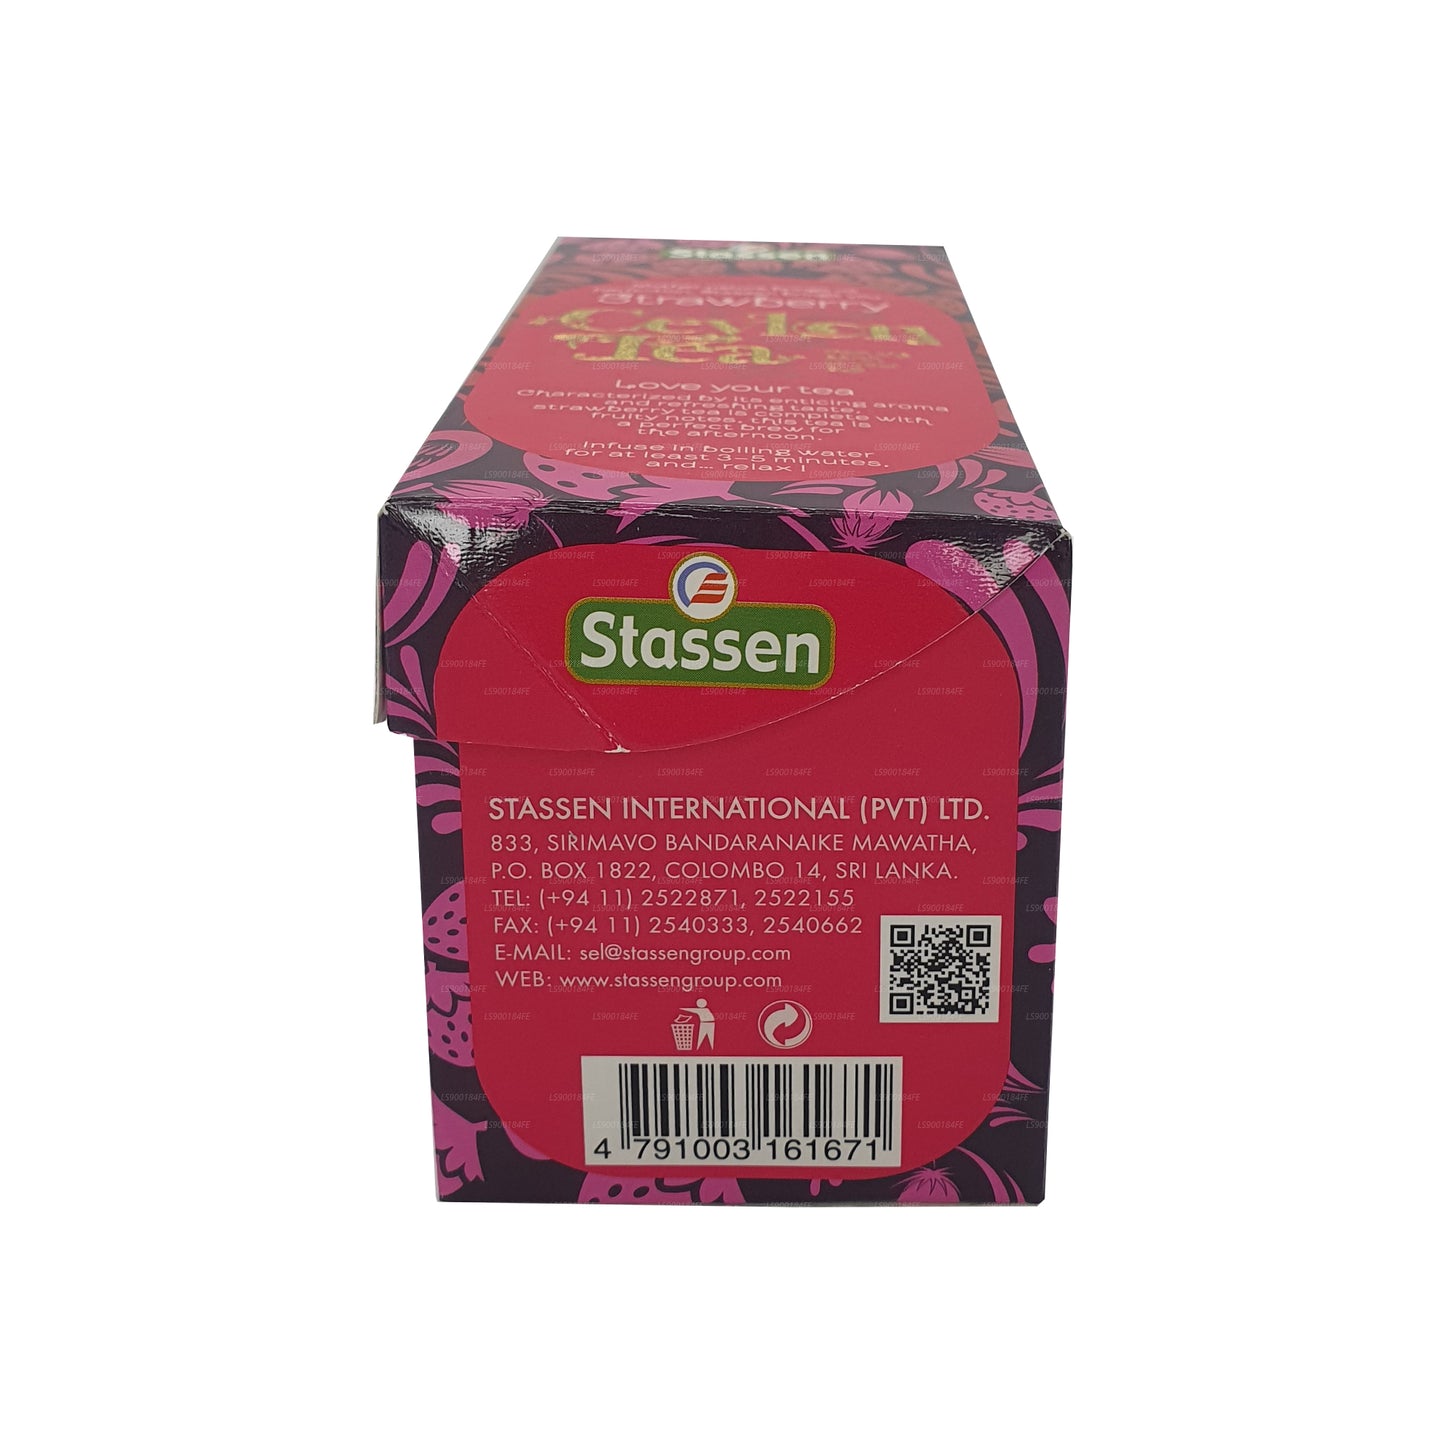 Stassen Strawberry Tea (37.5g) 25 Tea Bags